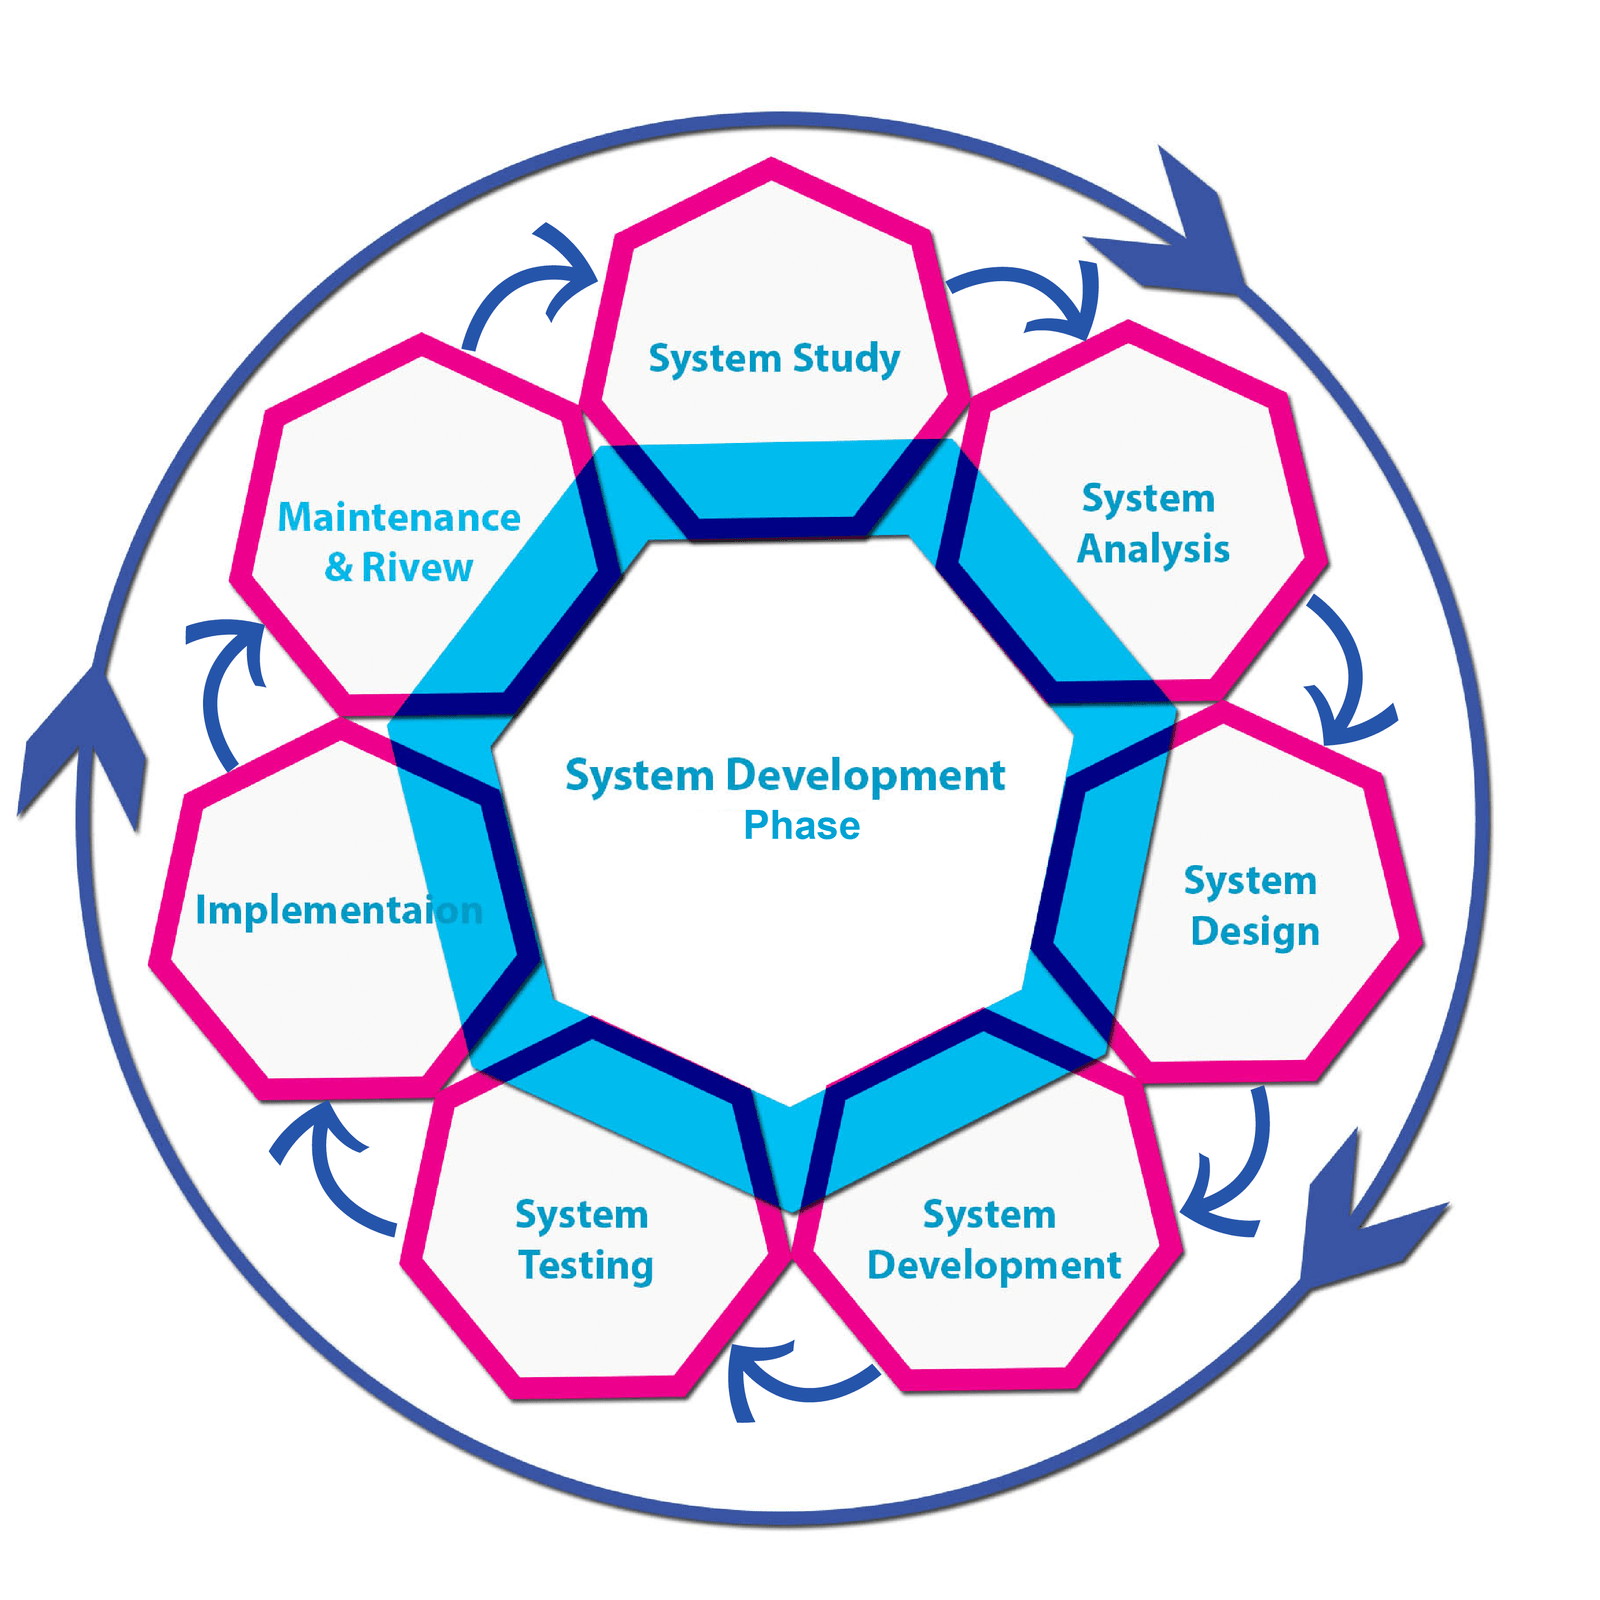 7 Phase of System Development